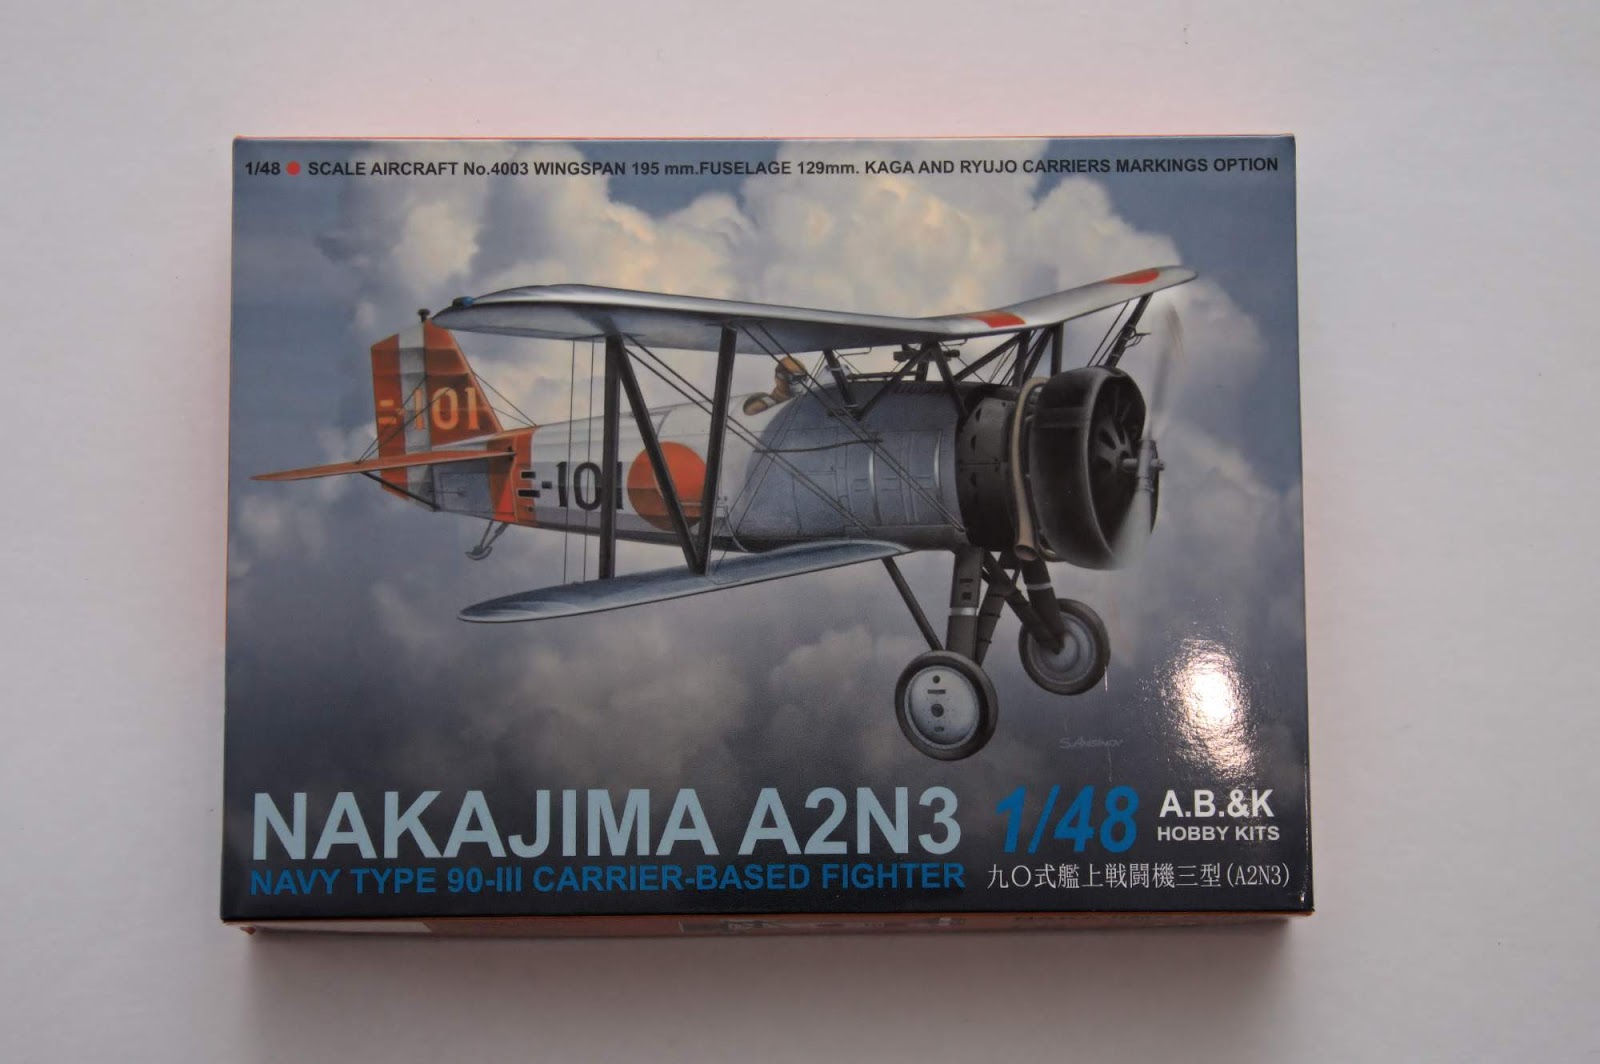 WildEagles: Nakajima A2N3 1:48, A.B. & K - kit review by Jan Kanov.